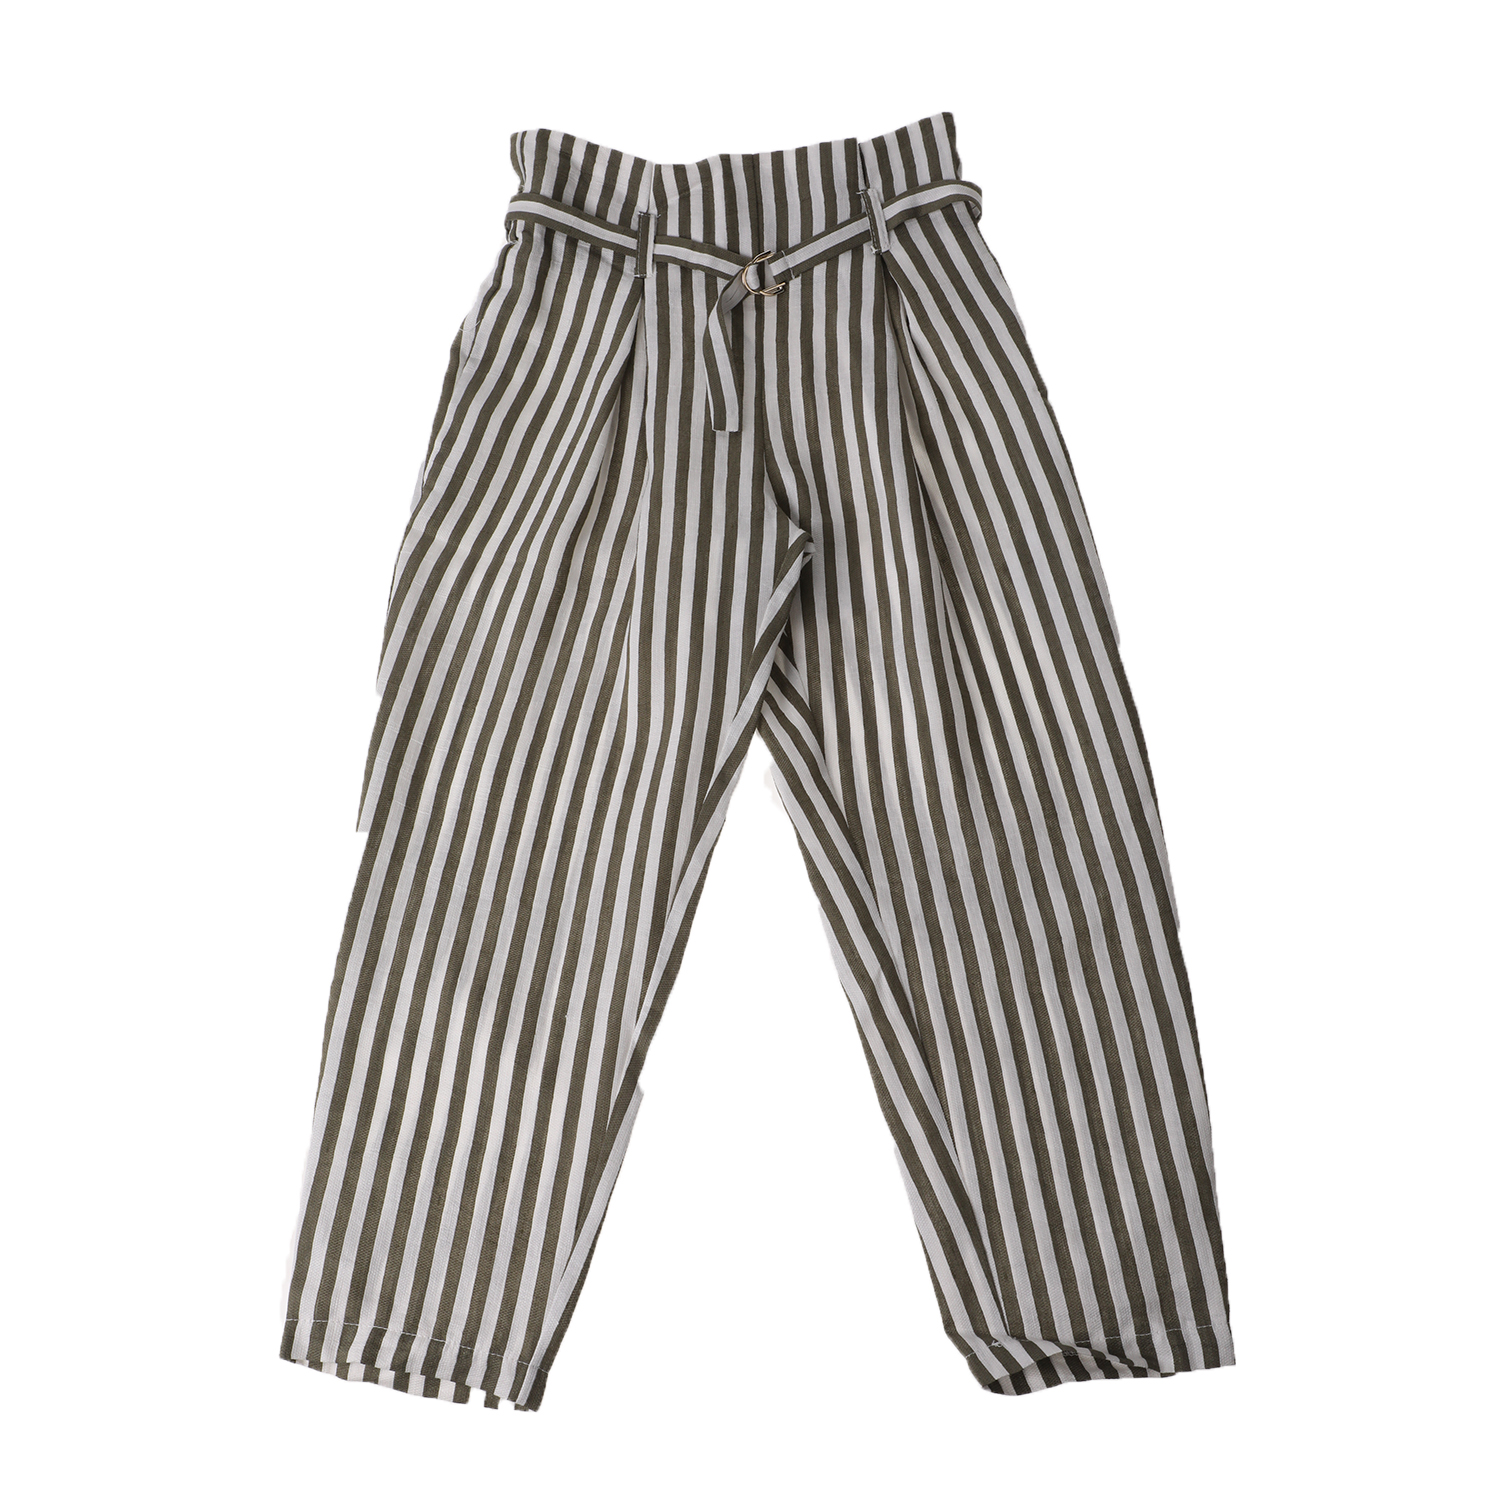 JAKIOO - Παιδική παντελόνα JAKIOO PANTALONI A RIGHE ριγέ Παιδικά/Girls/Ρούχα/Παντελόνια